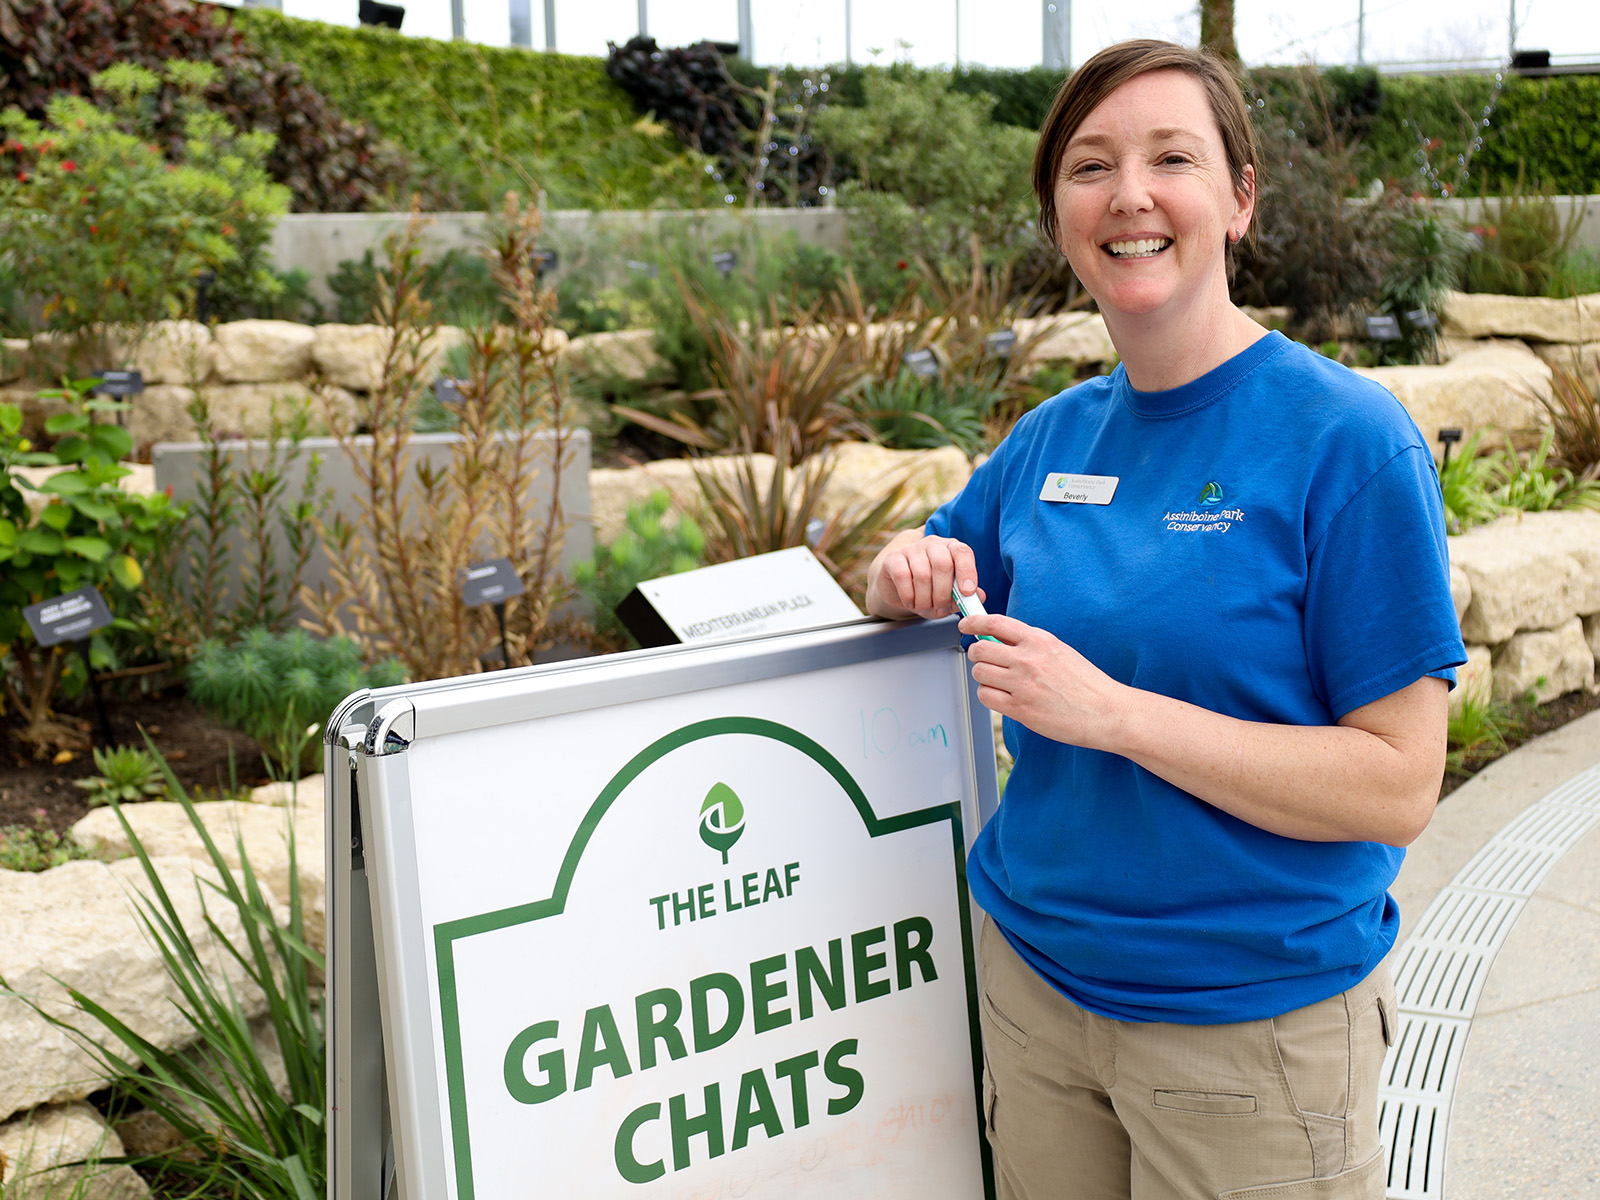 Gardener stands in front of a gardener chat sign